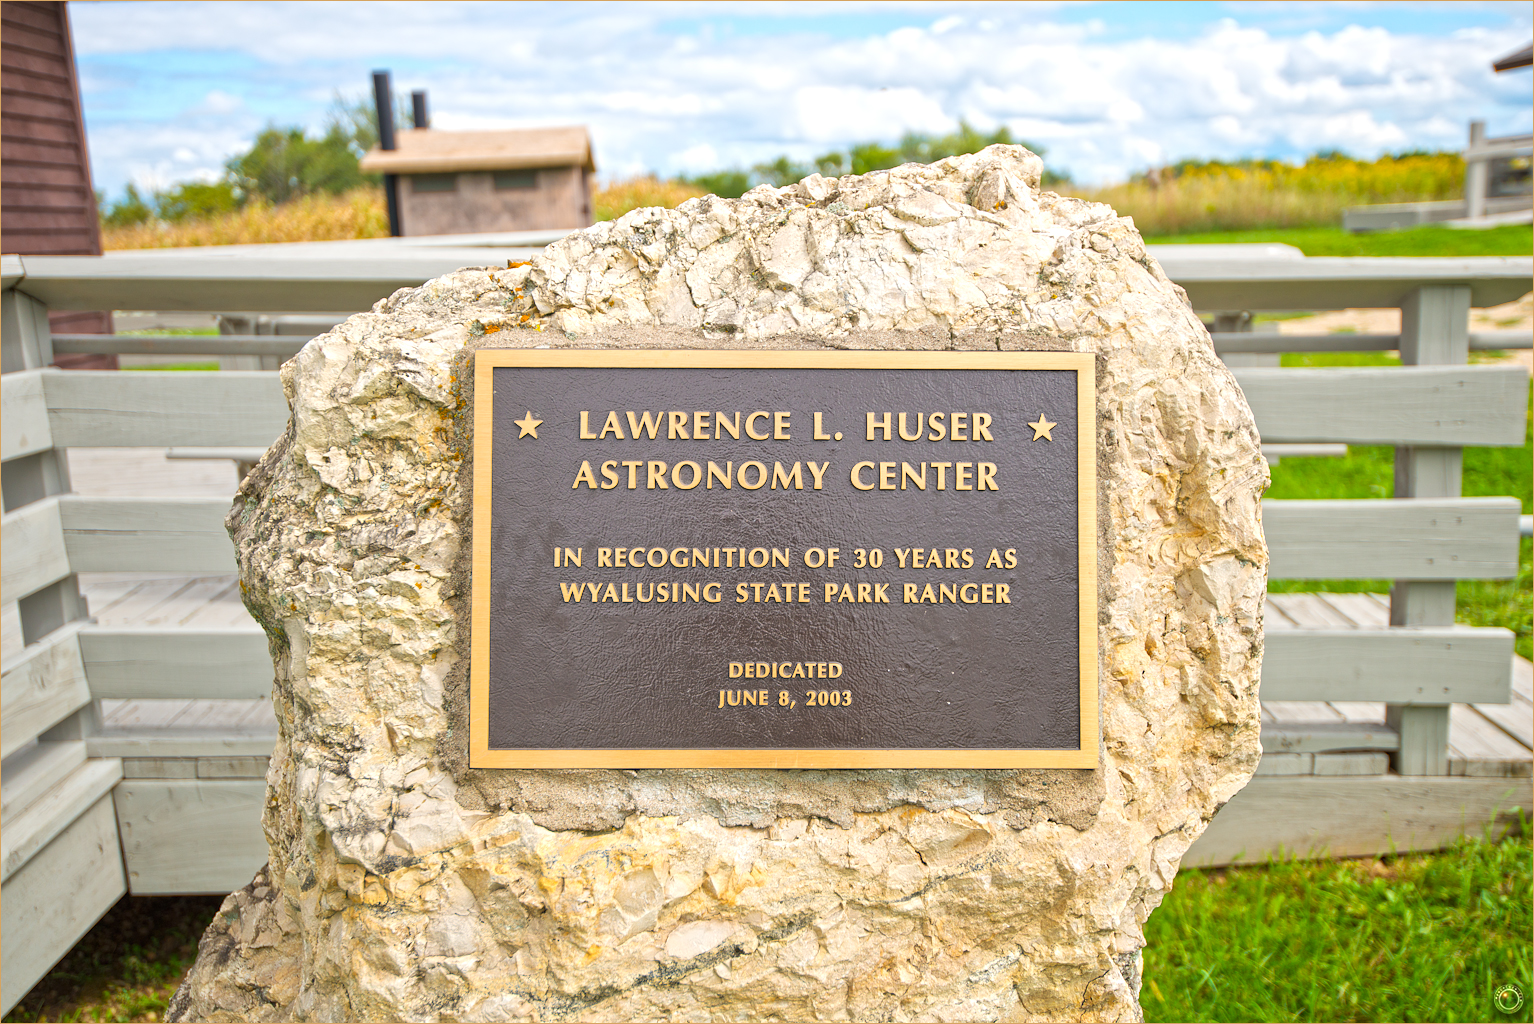 161 Wyalusing State Park Huser Astronomy Center